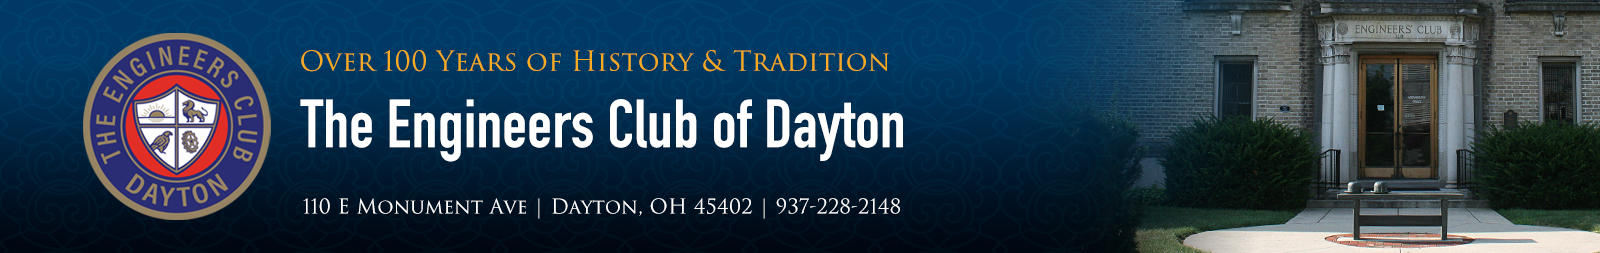 The Engineers Club of Dayton